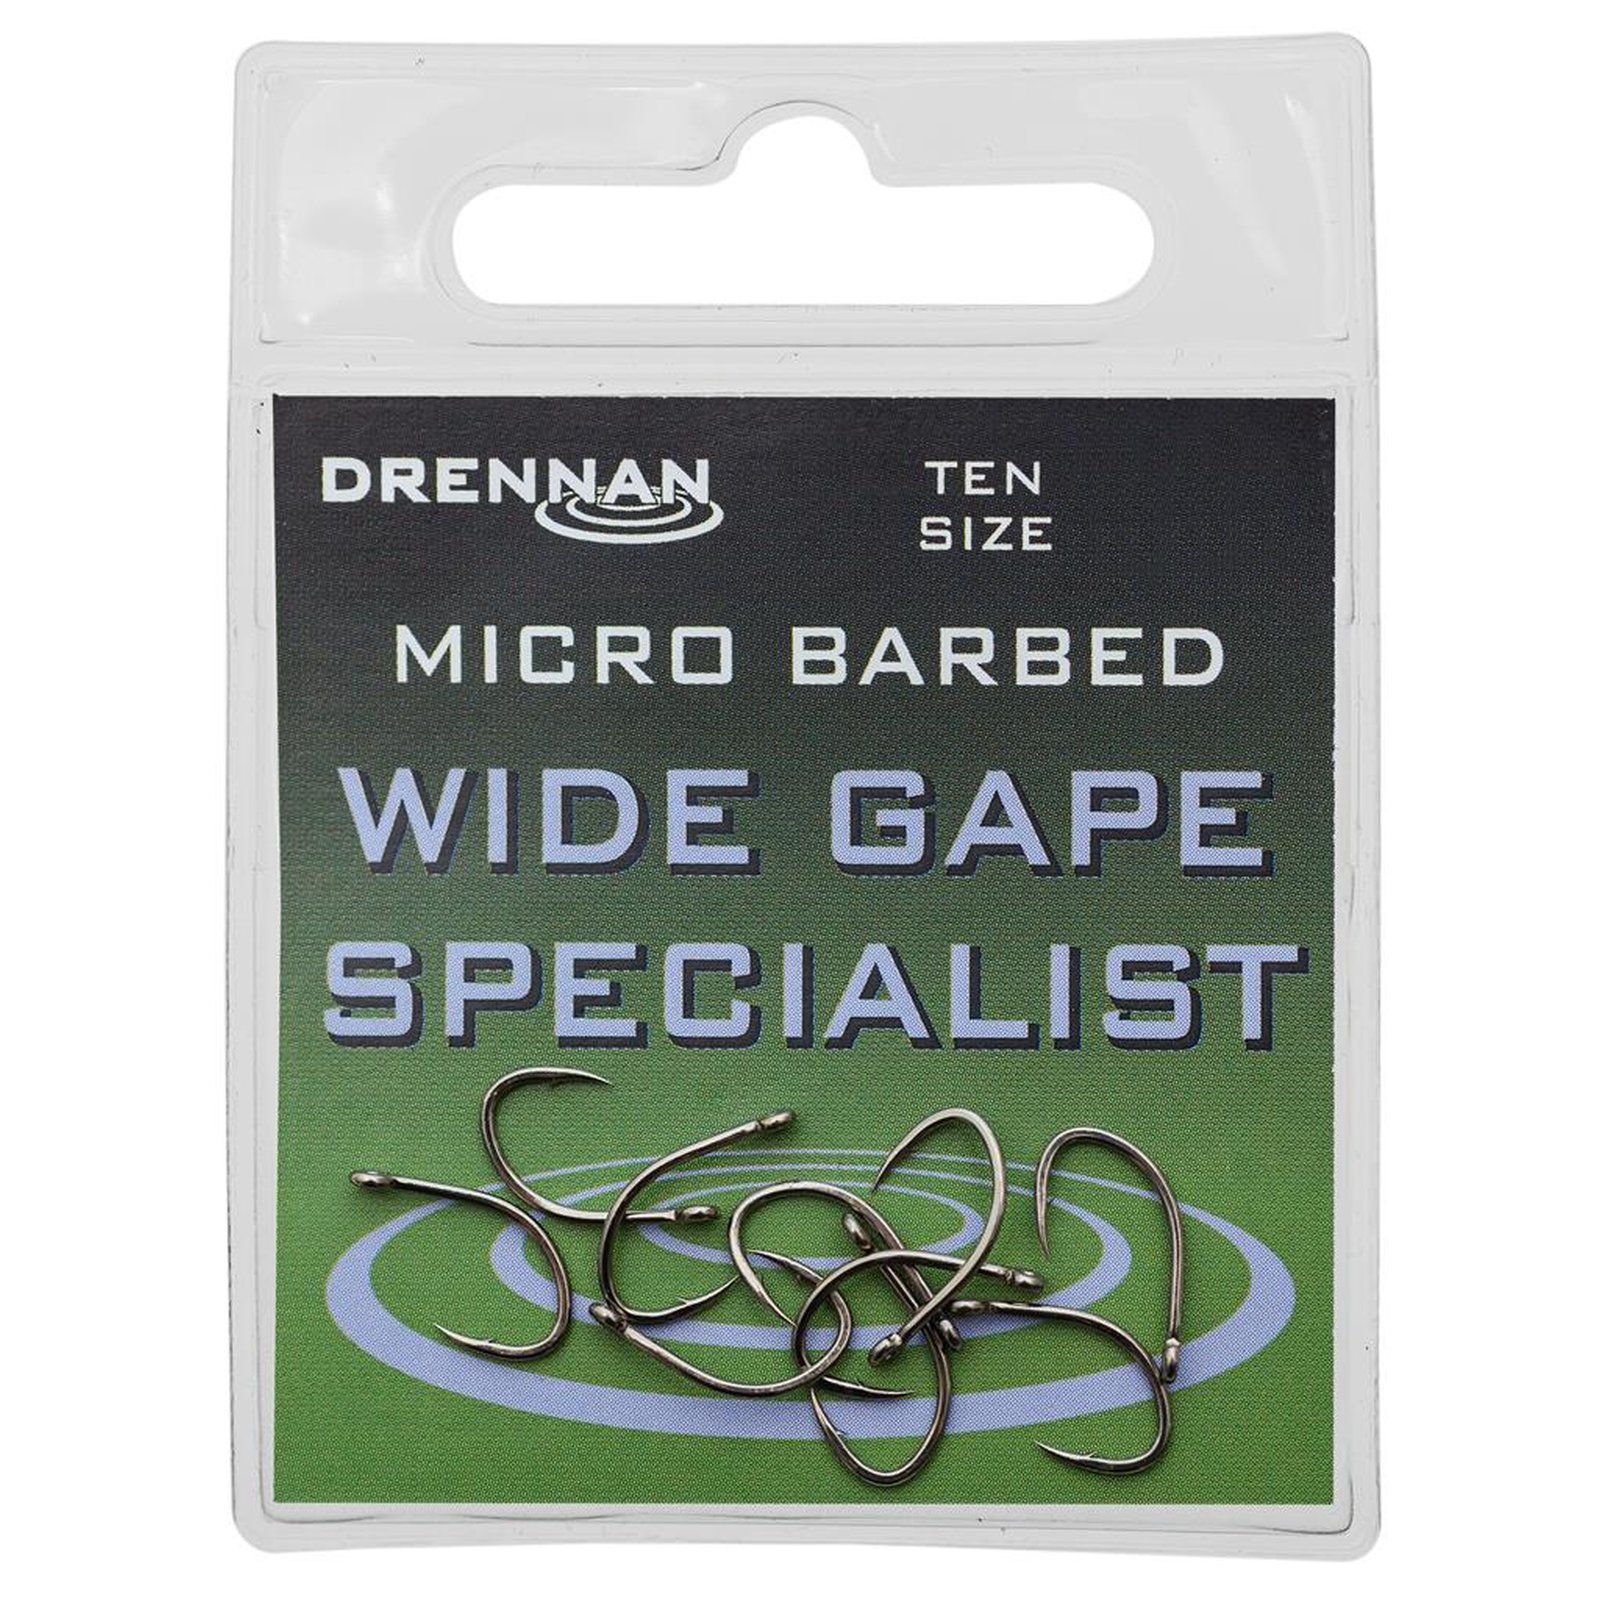 Drennan Wide Gape Specialist micro barbed 10